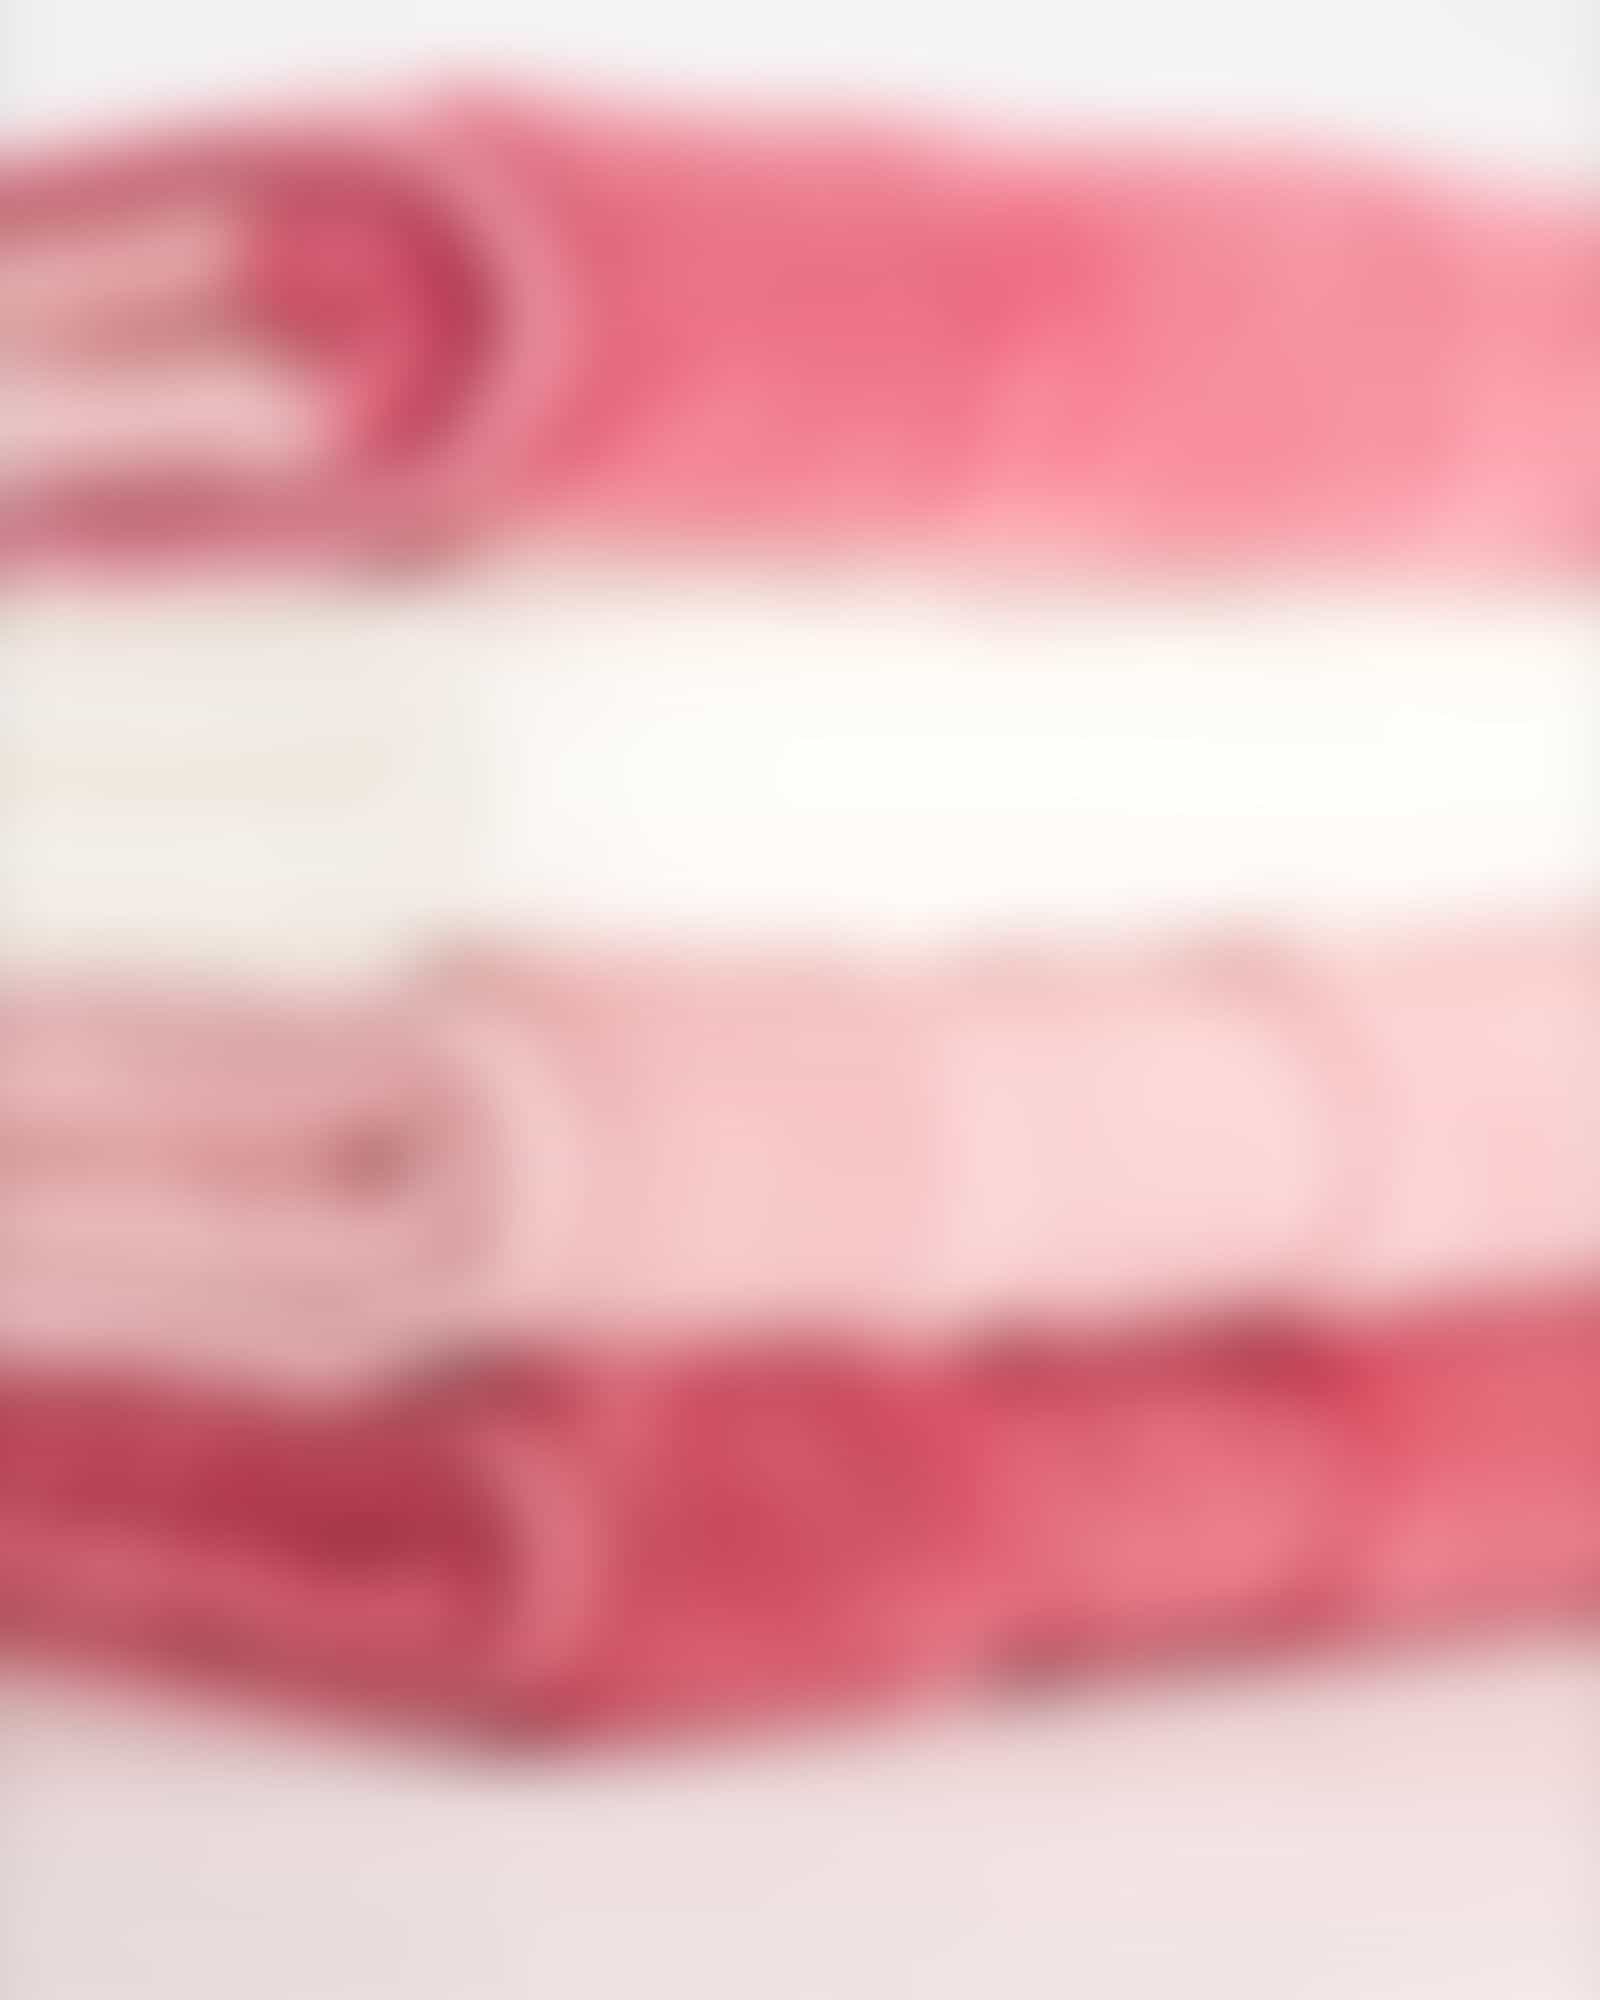 Cawö Handtücher Noblesse Stripe 1087 - Farbe: altrosa - 22 - Gästetuch 30x50 cm